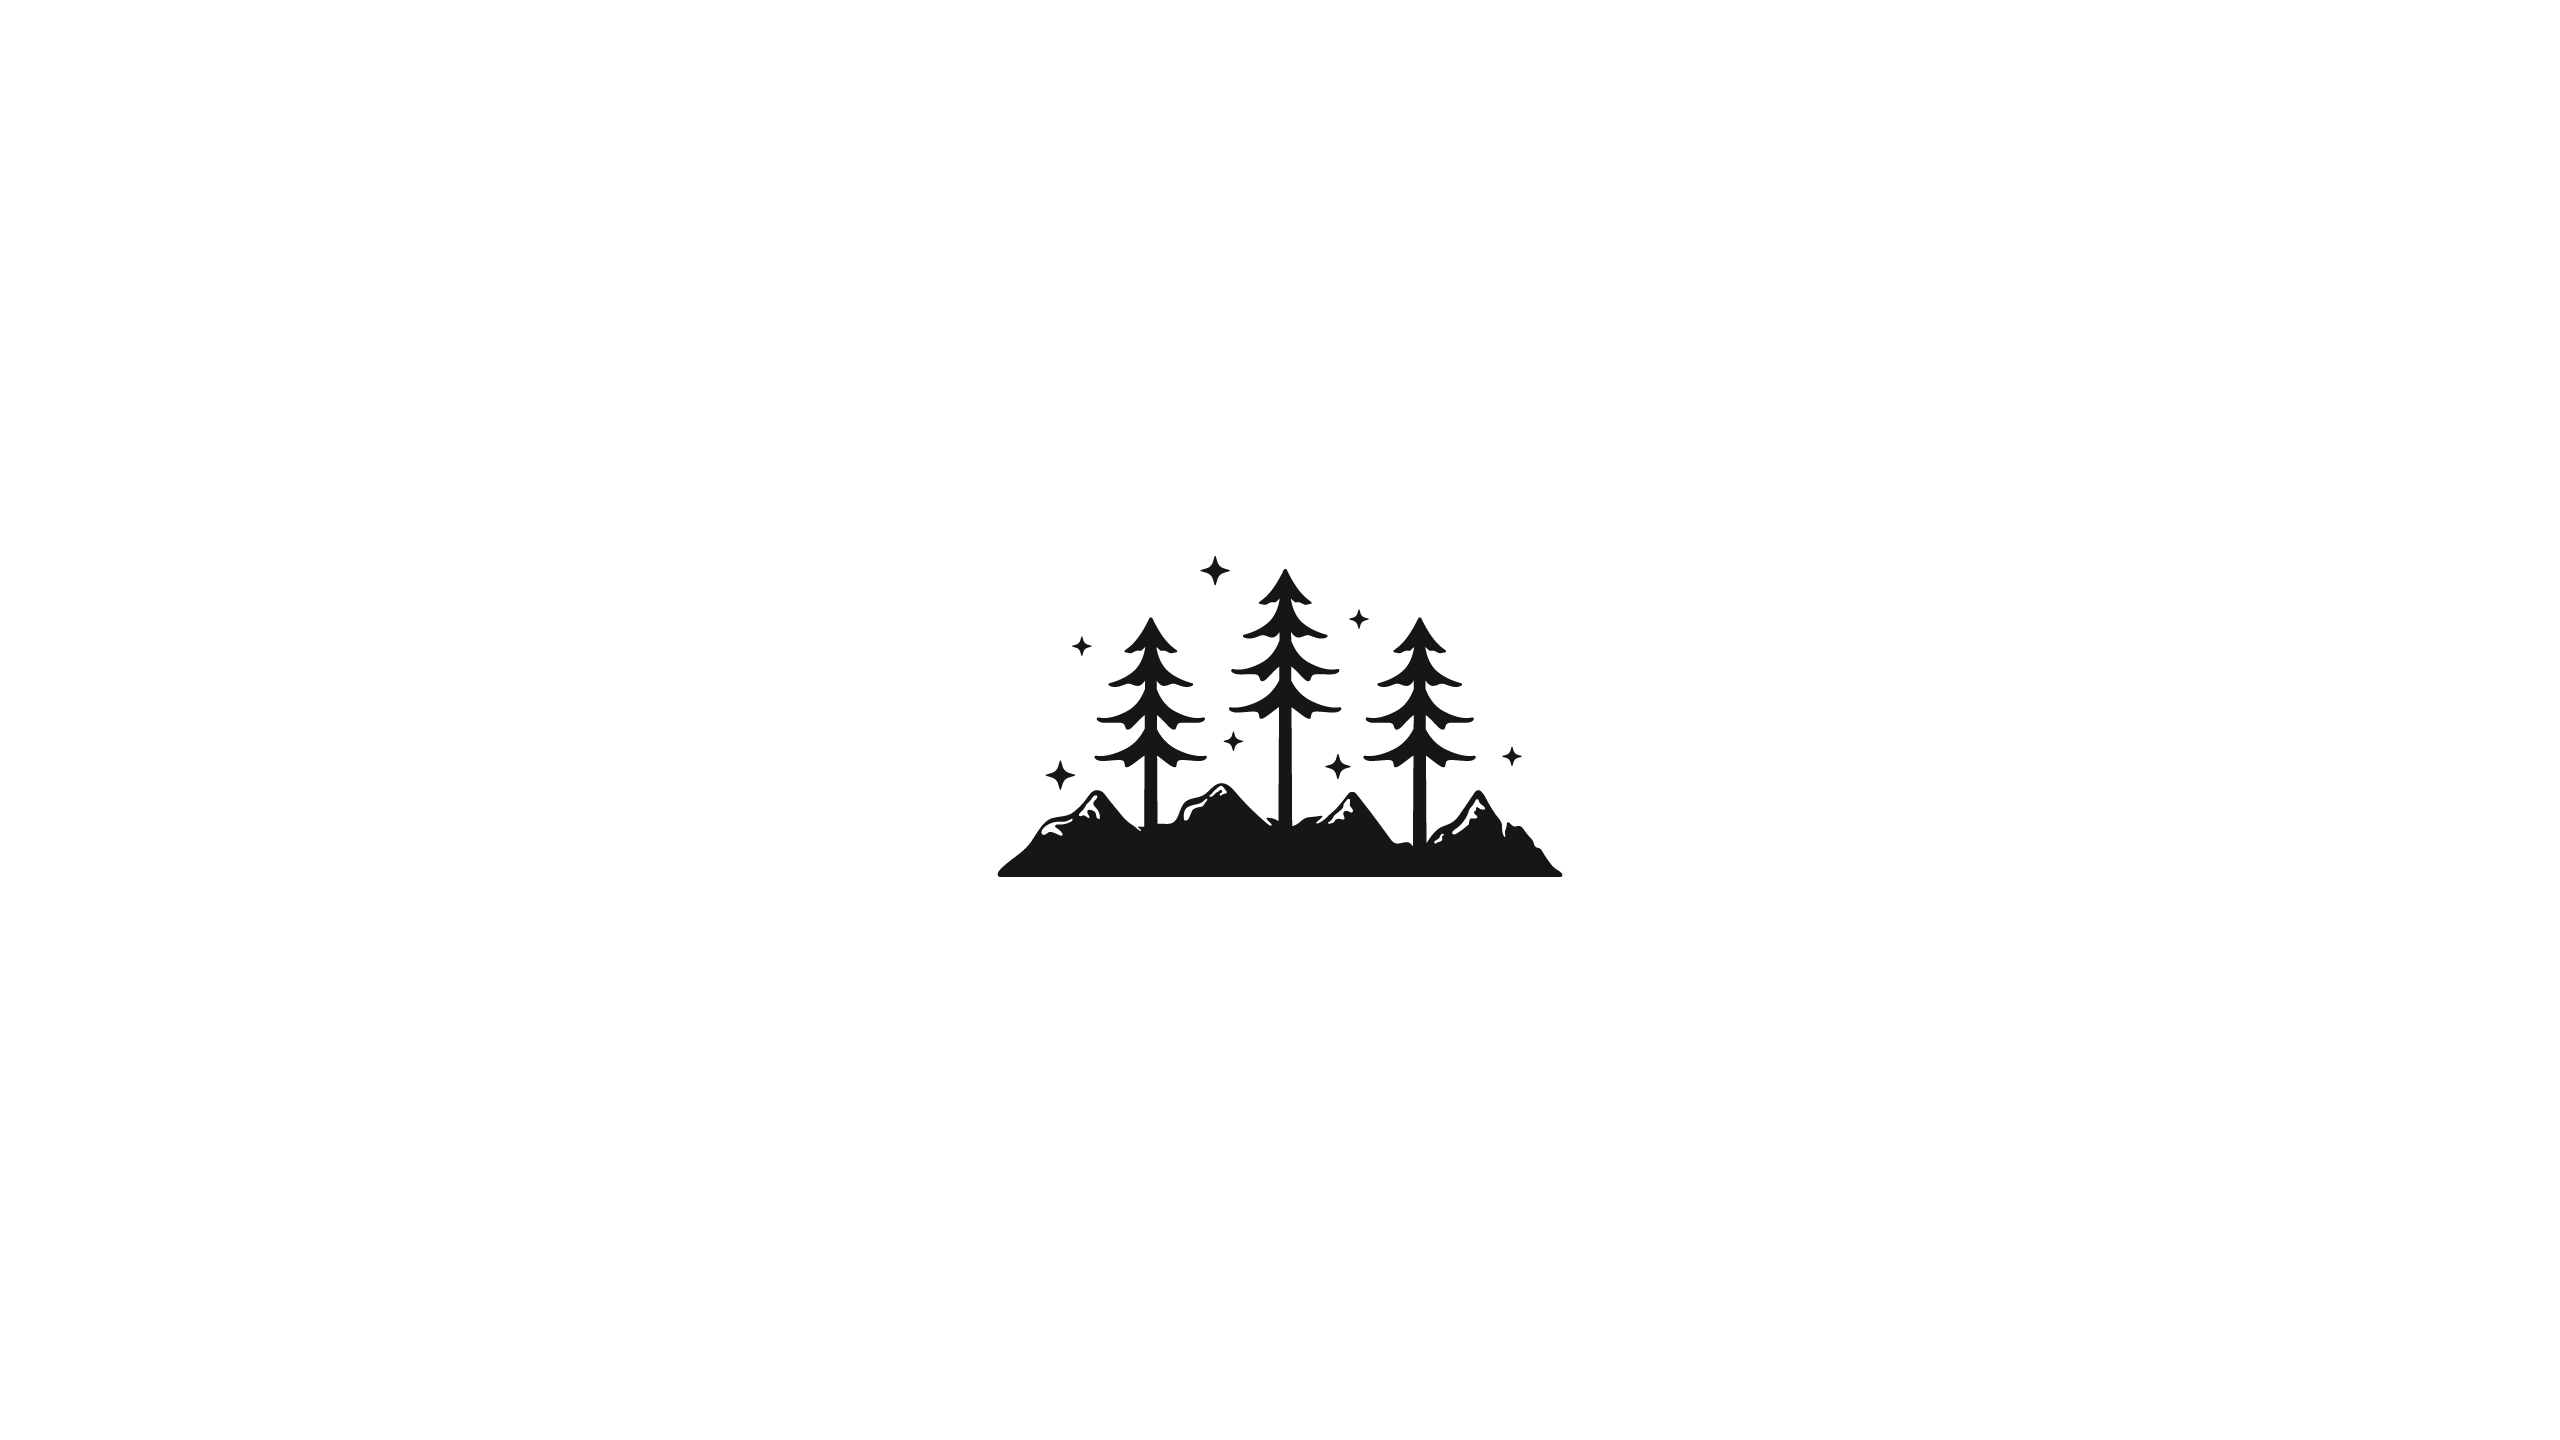 General 2560x1440 illustration white background pine trees trees mountains minimalism monochrome